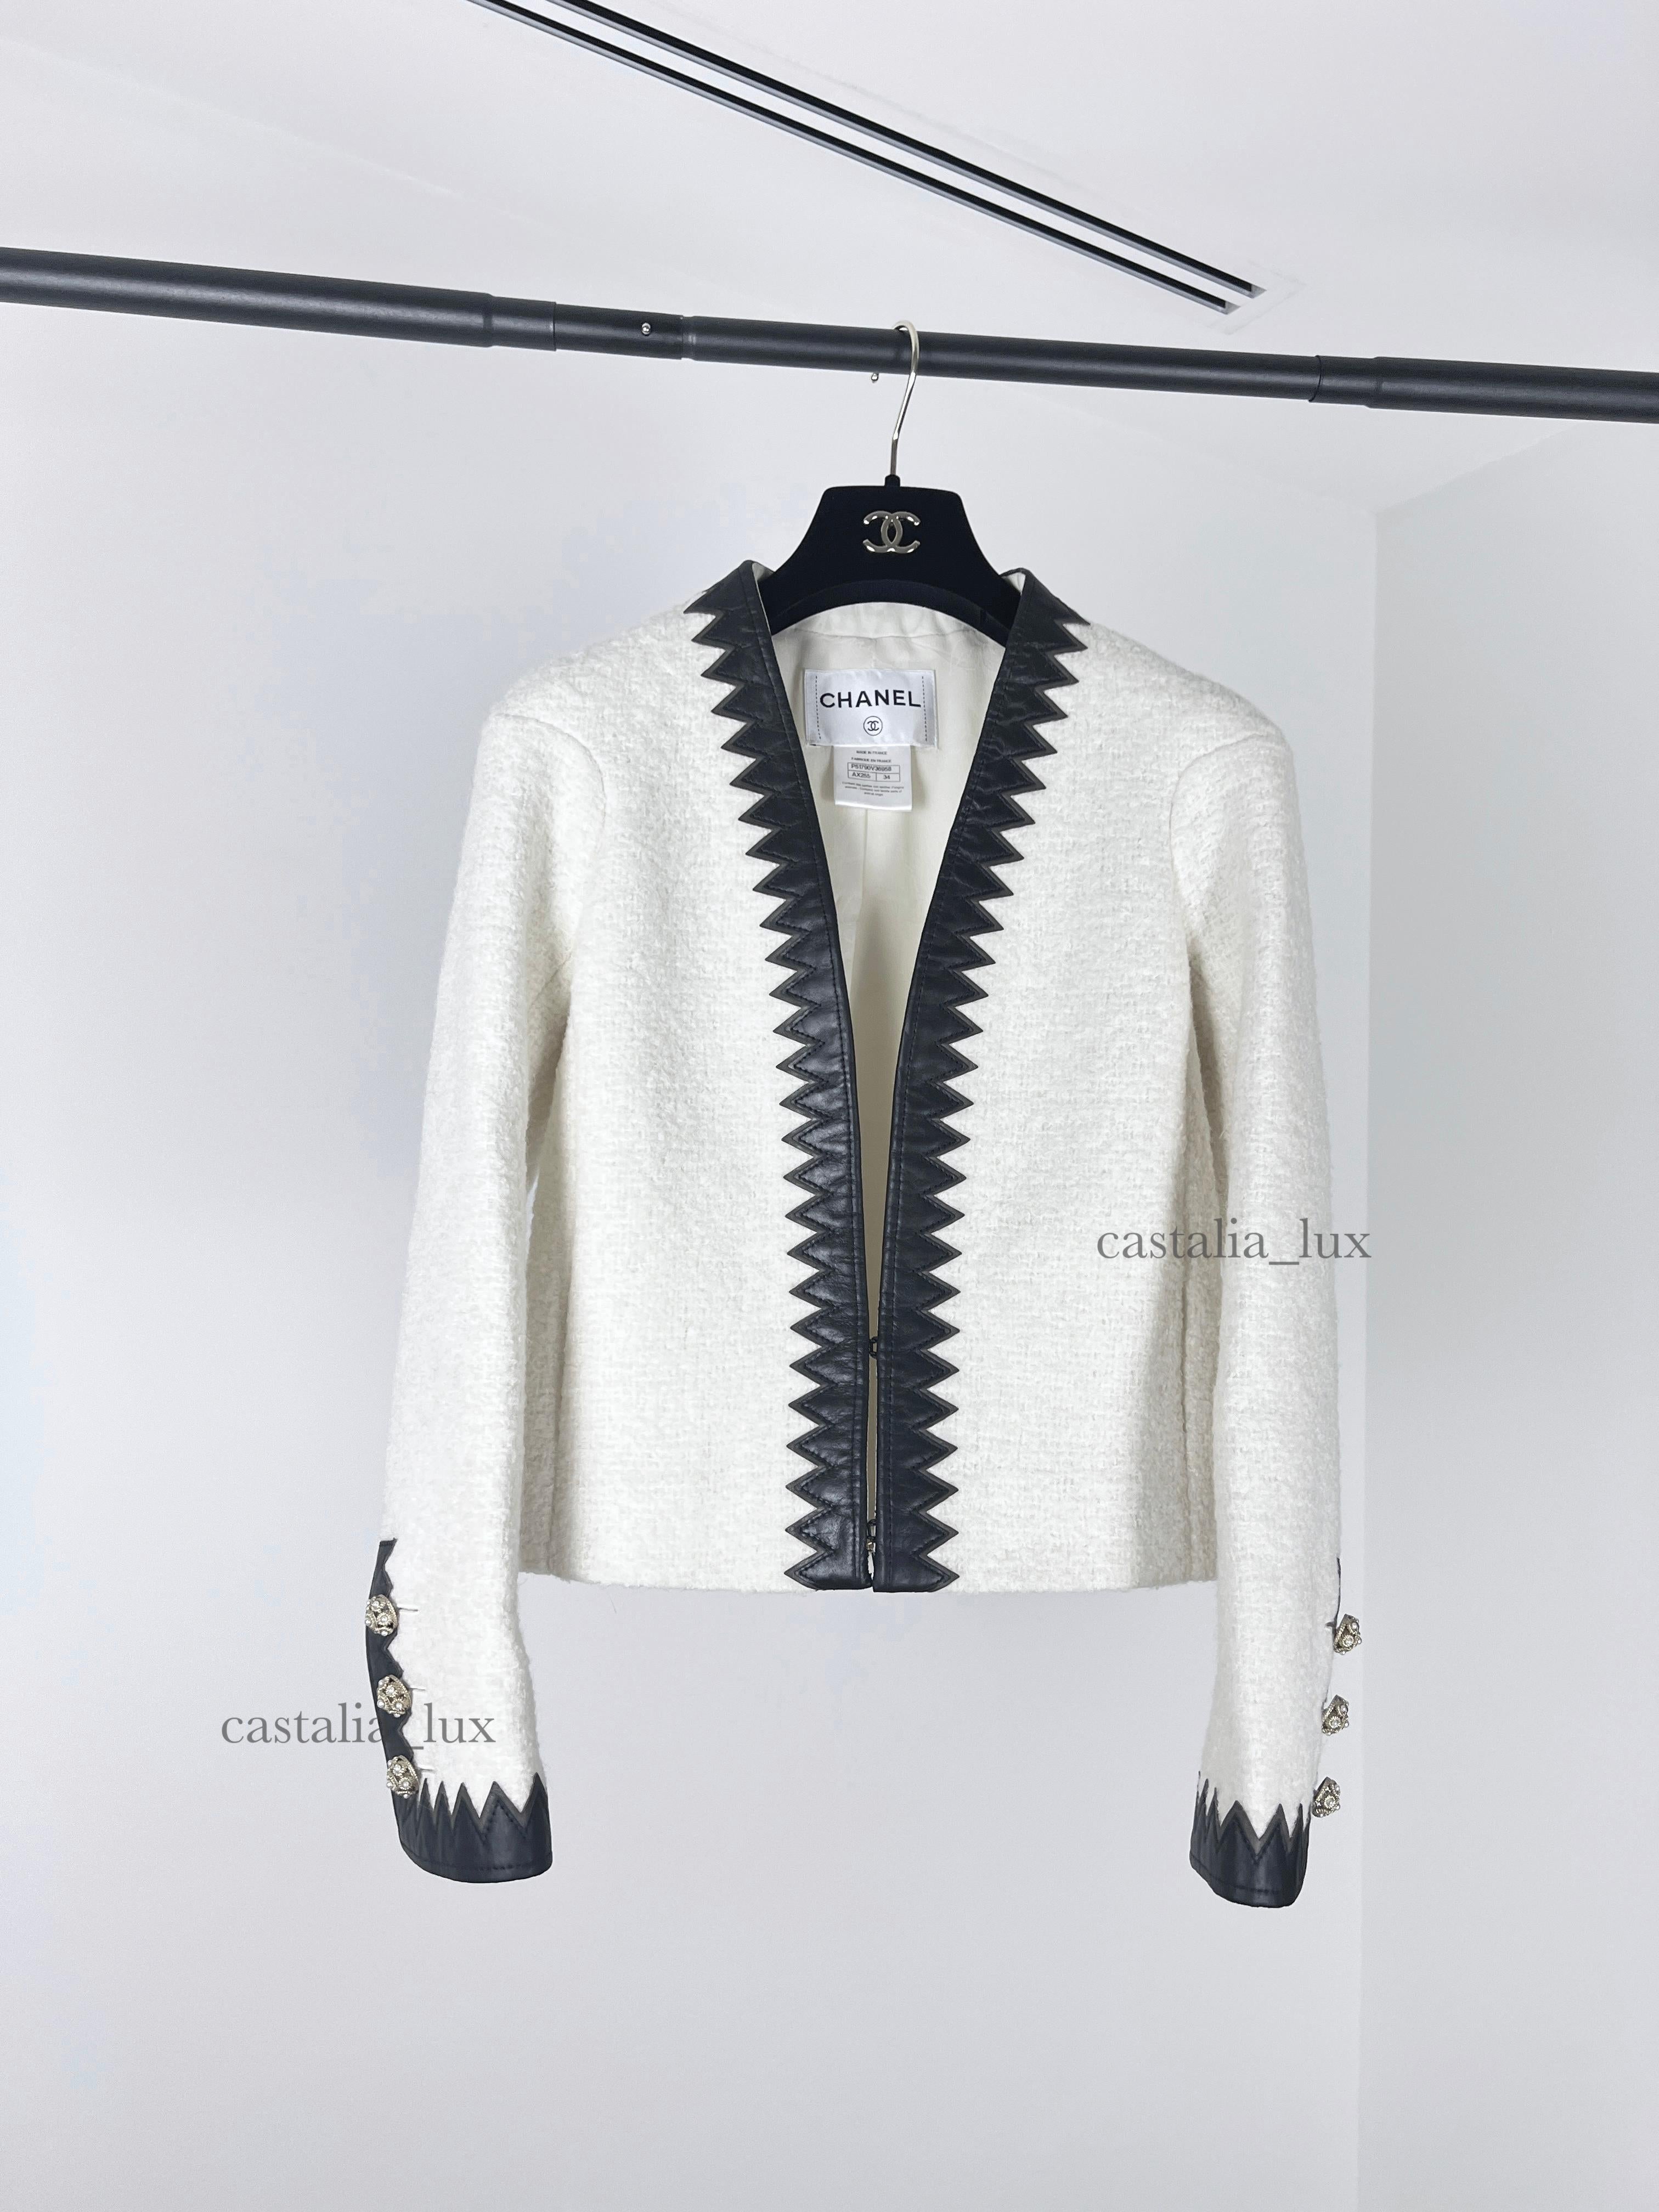 Chanel Paris / Salzburg Magnificent Tweed Jacket 8